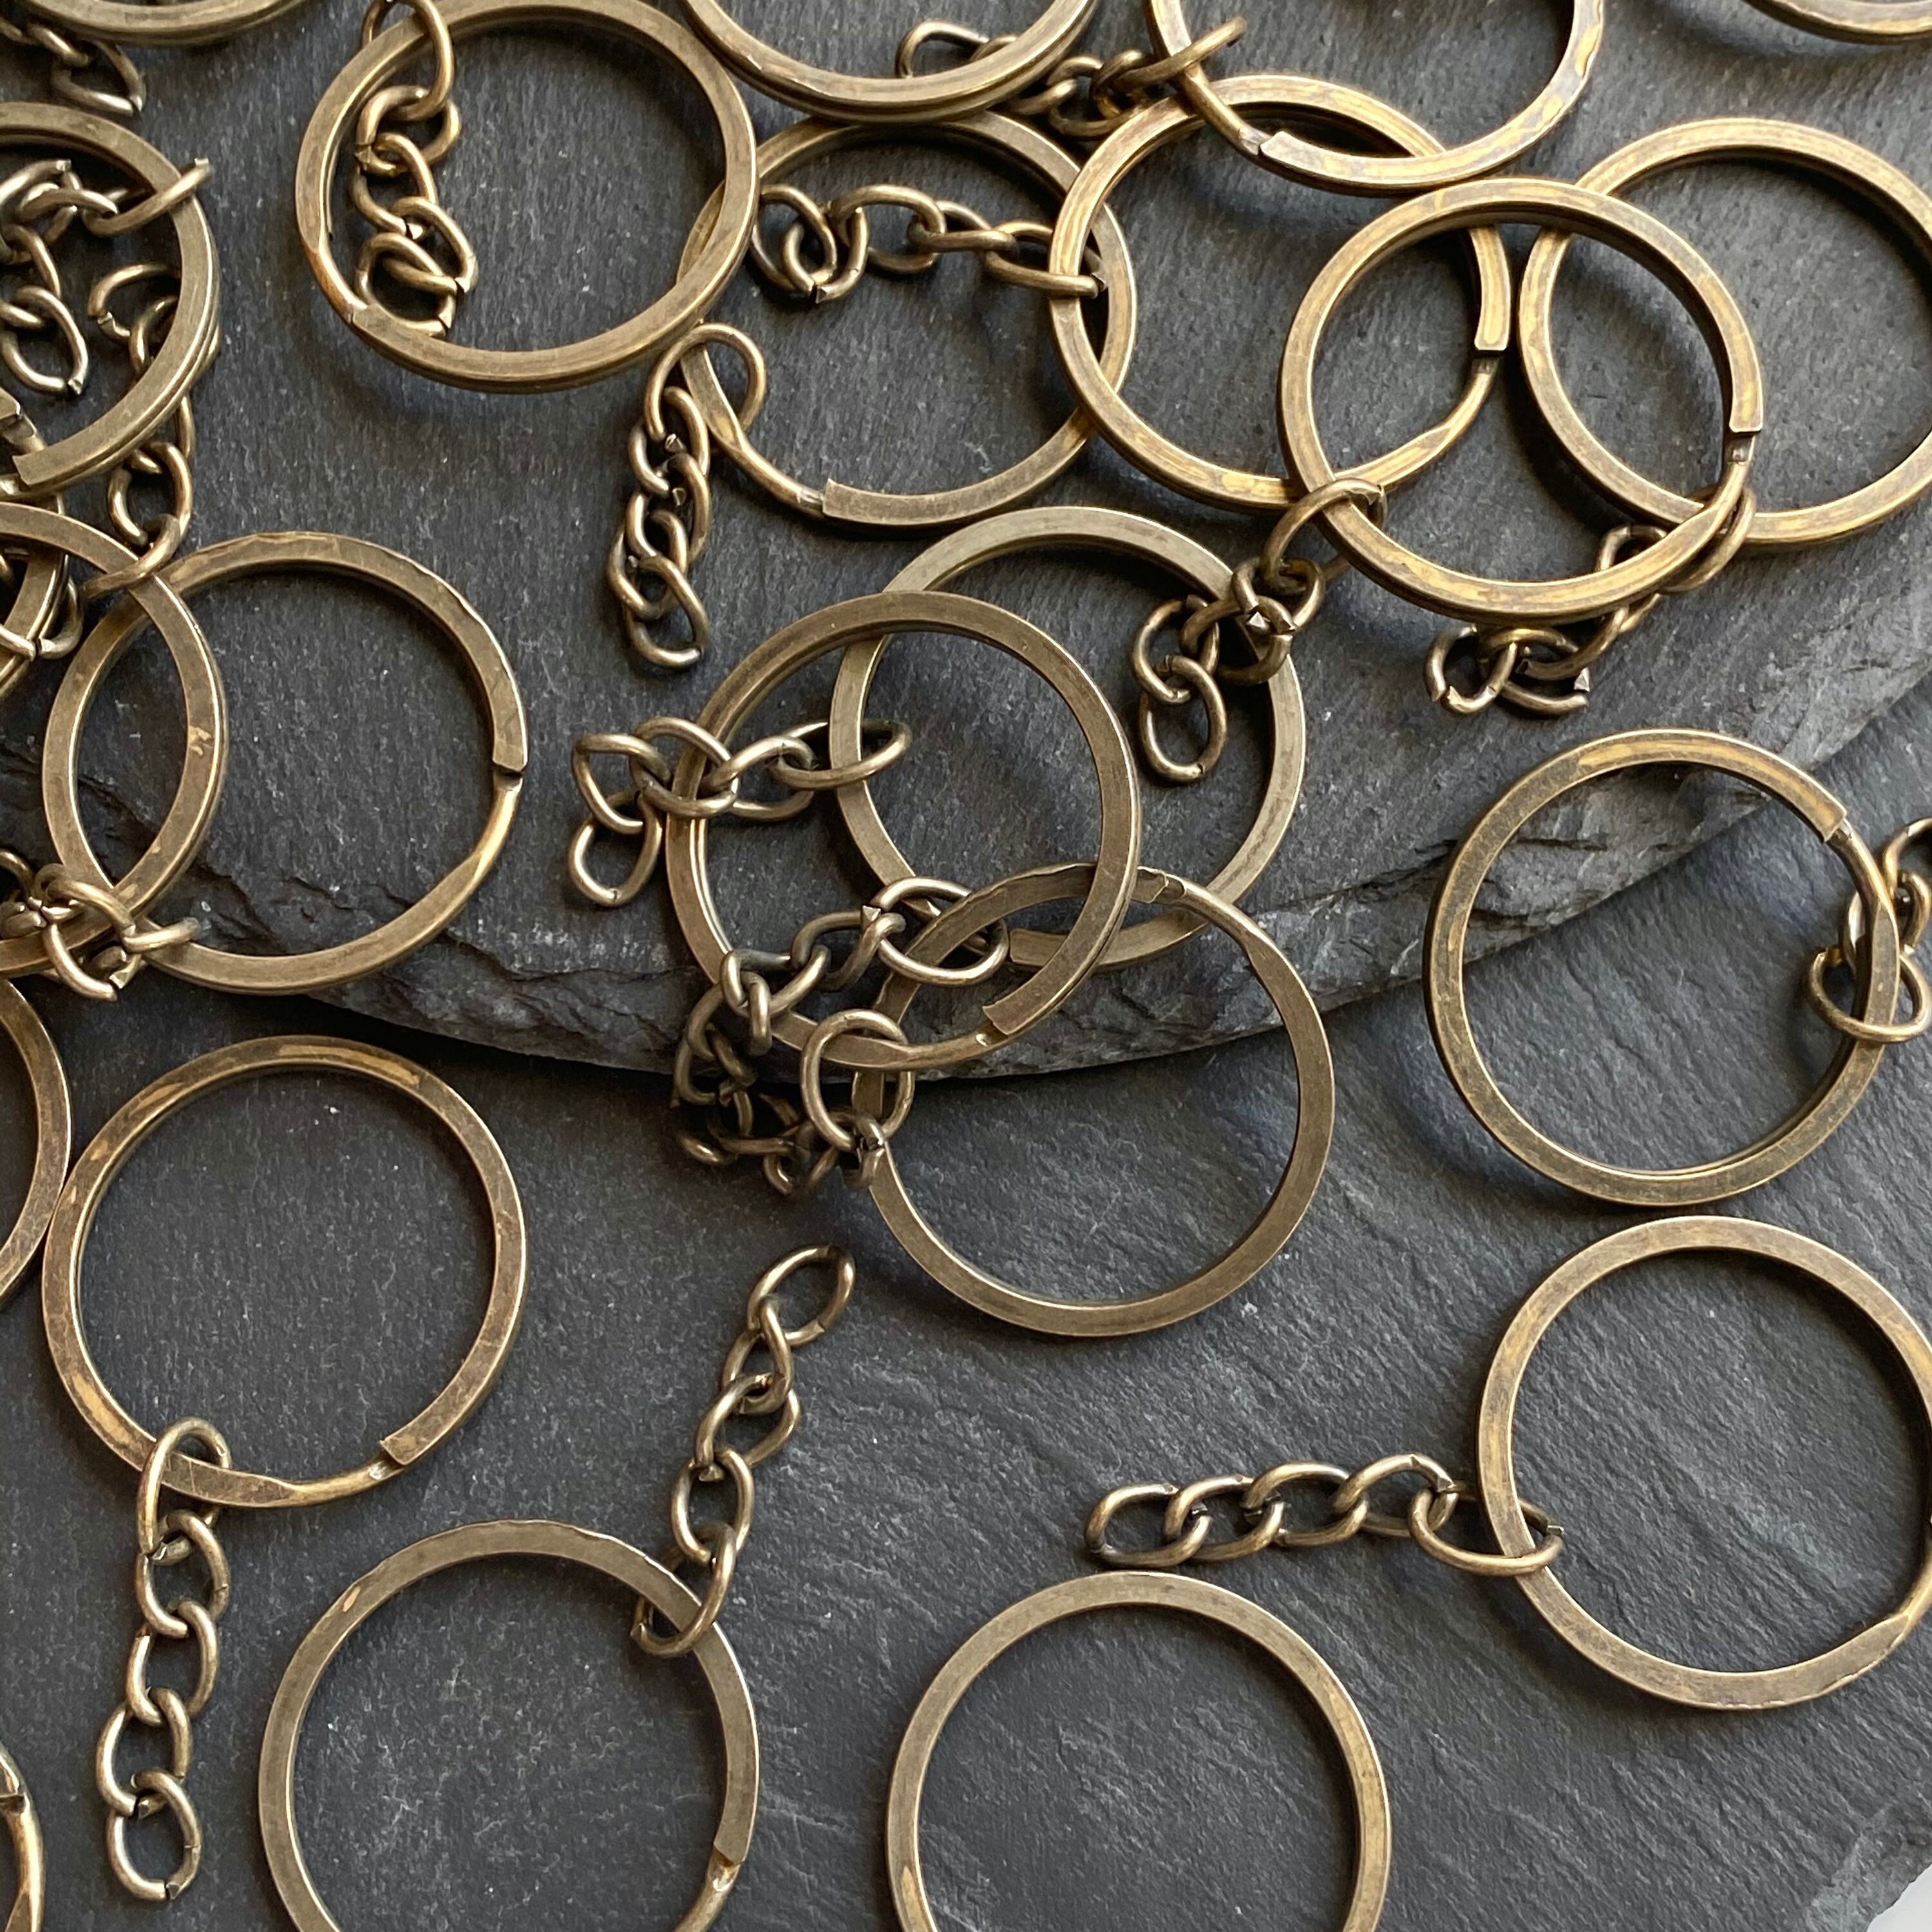 BronaGrand 200 Pieces 10mm Small Bronze Key Chain Rings Split Ring Key Chains for Keys Organization 